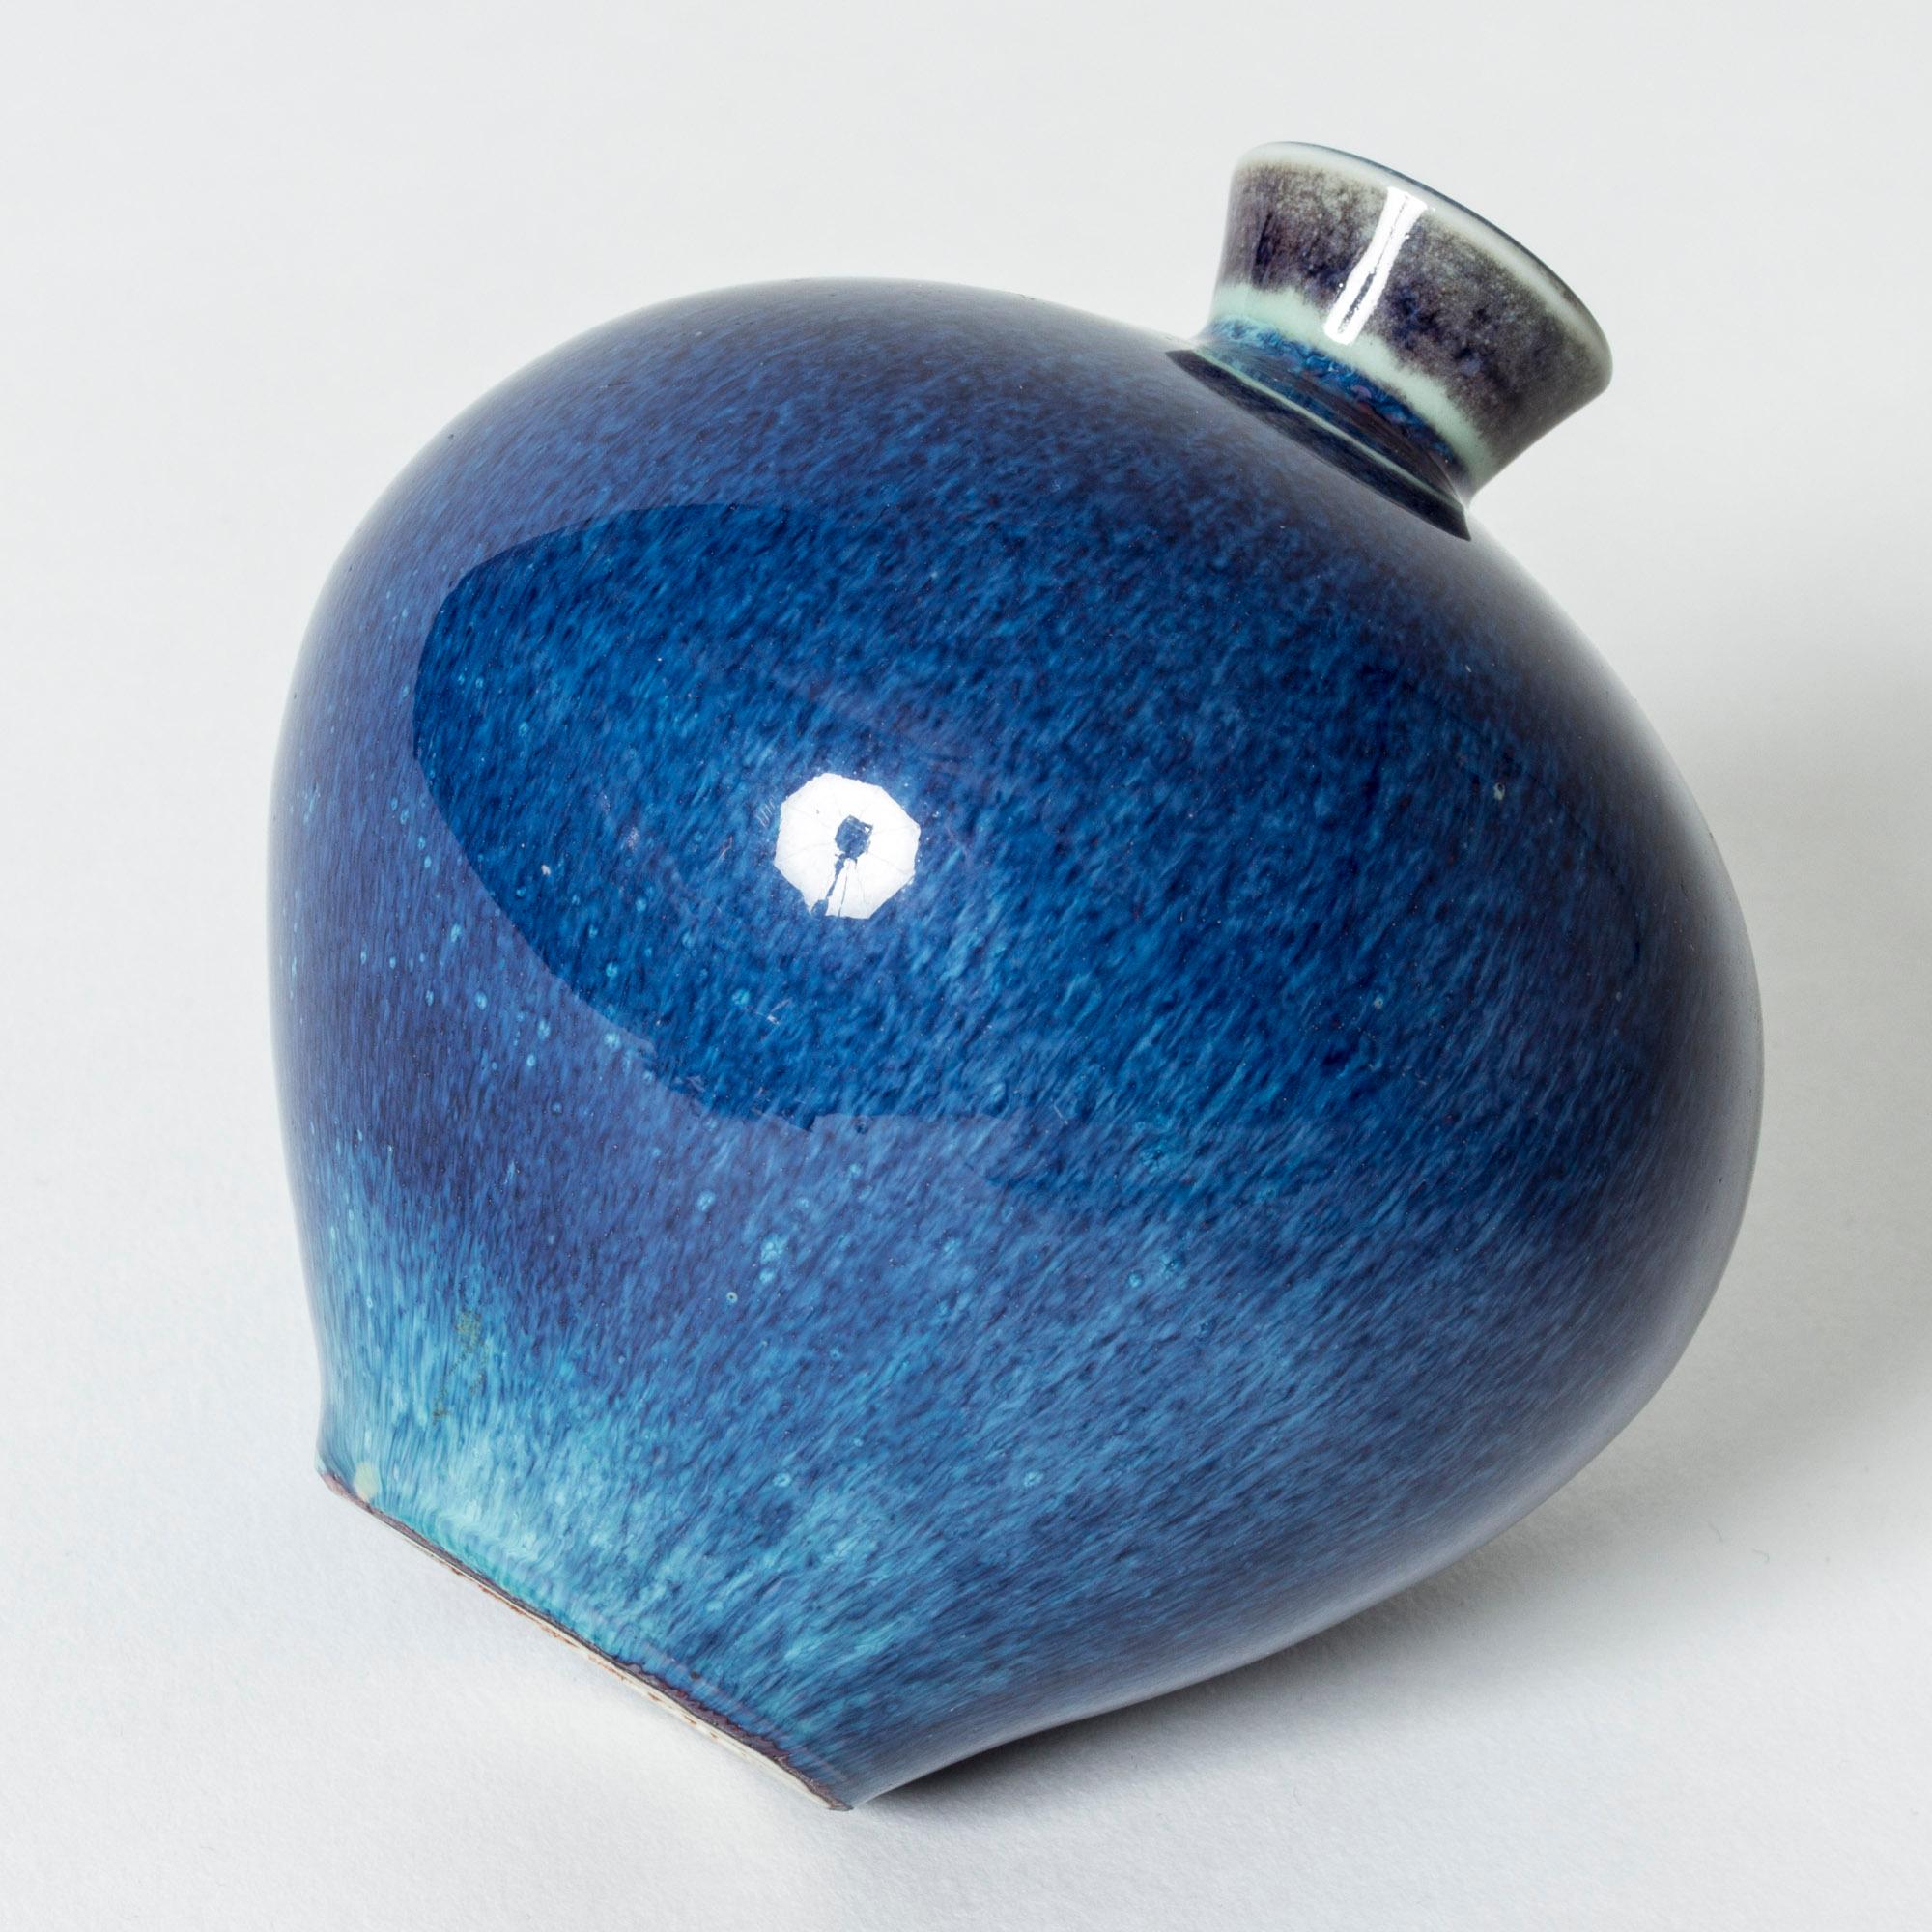 Small stoneware vase by Berndt Friberg, with intense blue “Aniara” glaze with aquamarine streaks. Lovely, plump form.